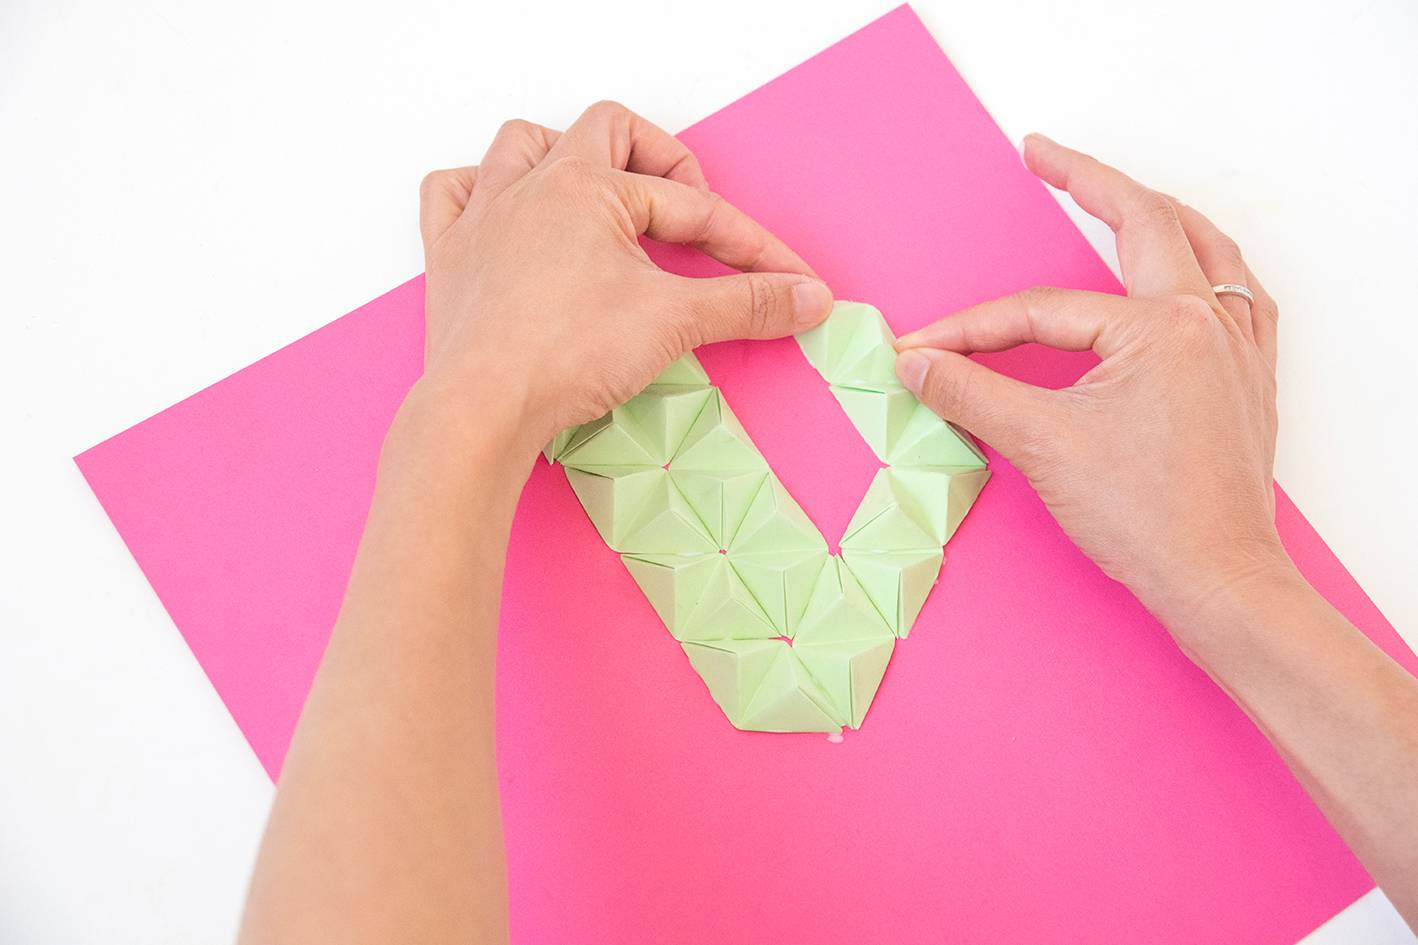 Step 5 - Easy DIY origami wall art in under half an hour!